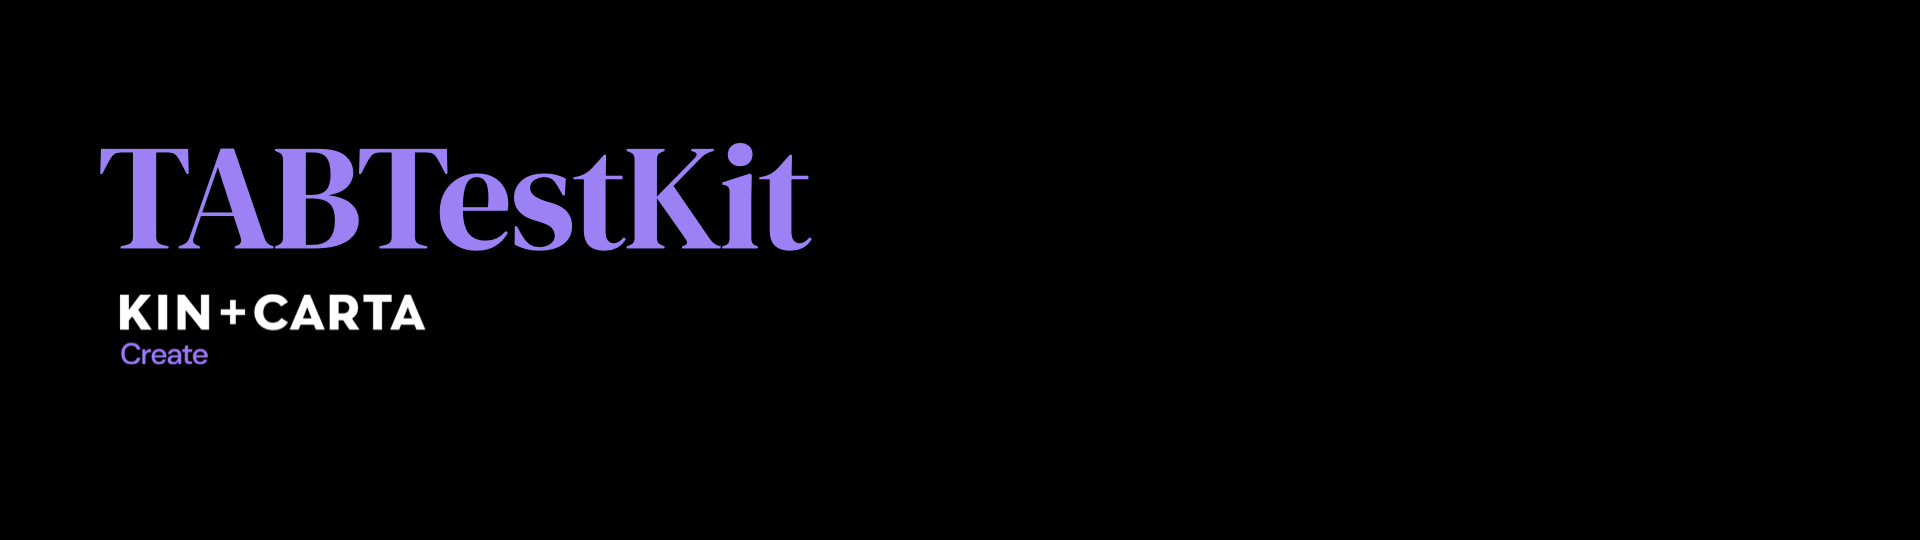 TABTestKit - Kin + Carta Create